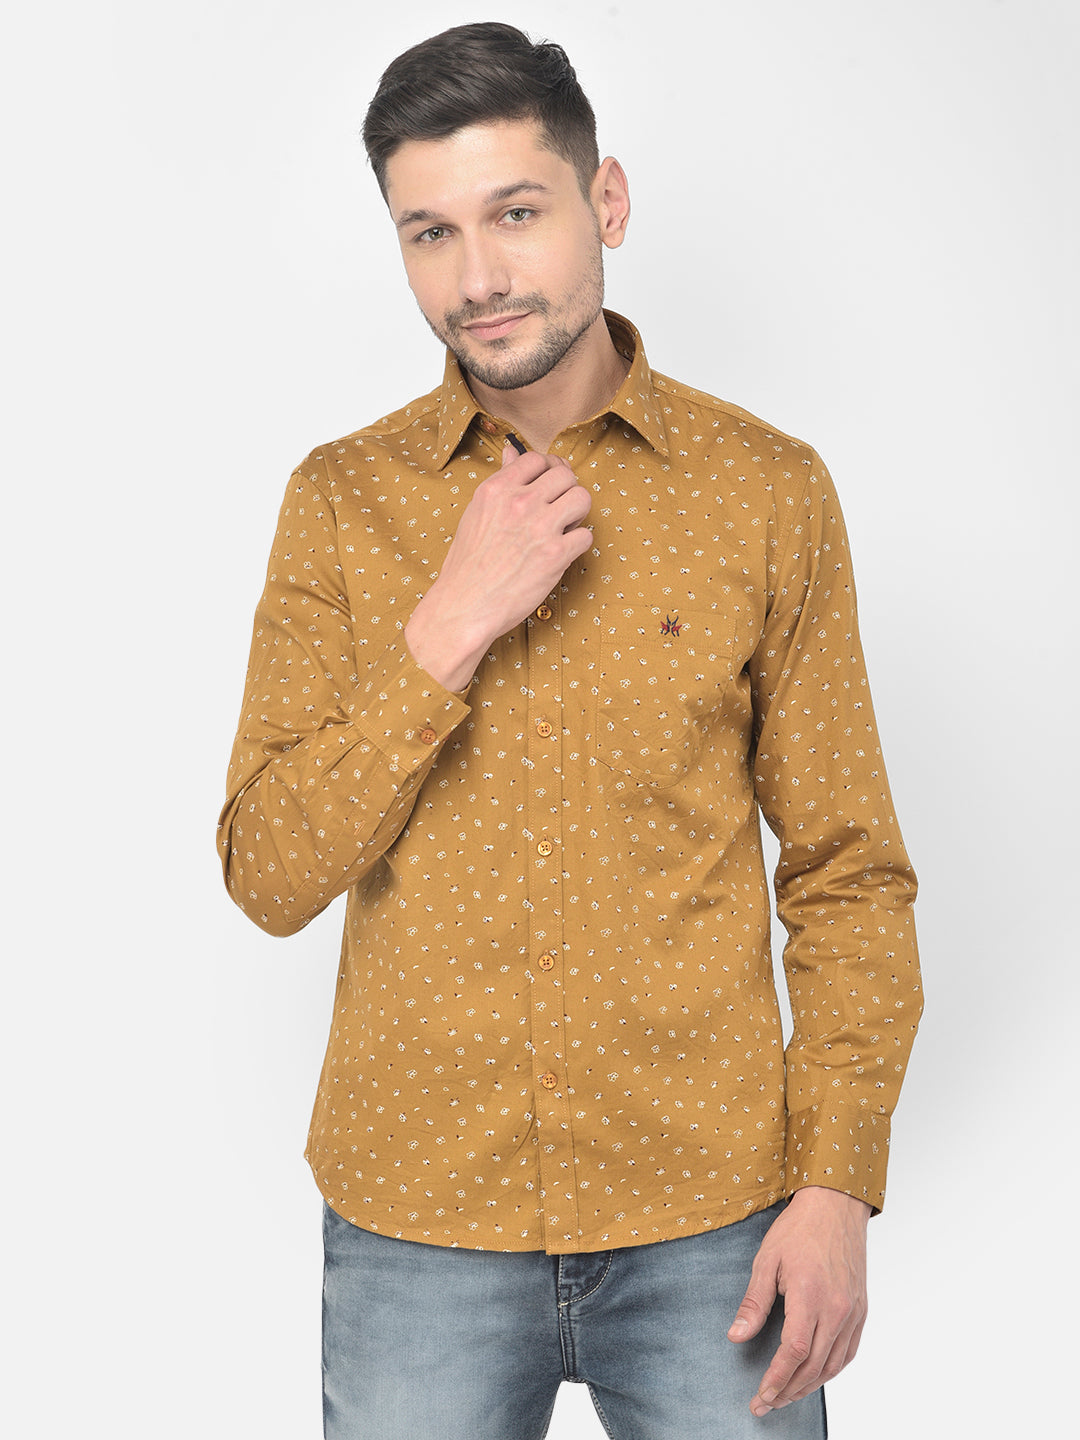 Mustard Printed Spread Collar Shirt - Men Shirts